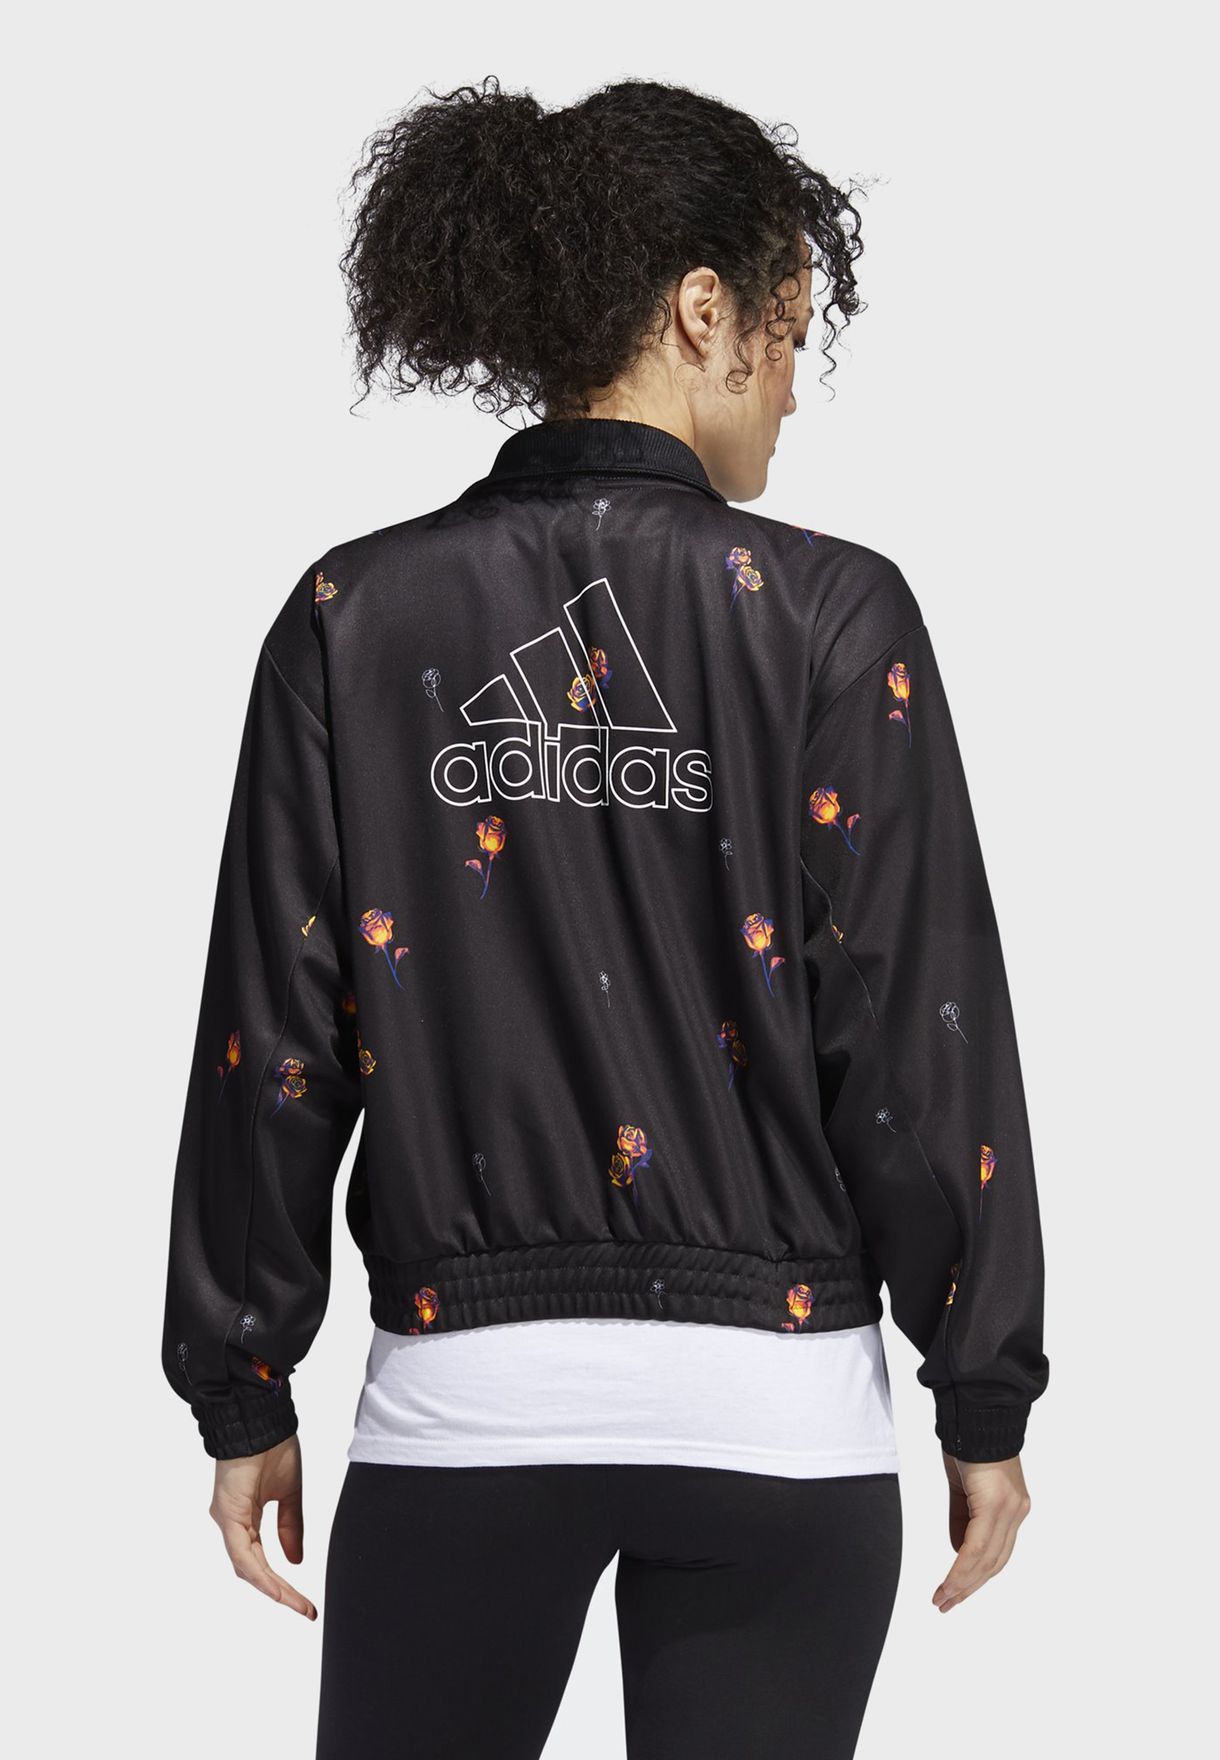 adidas jacket floral sleeves